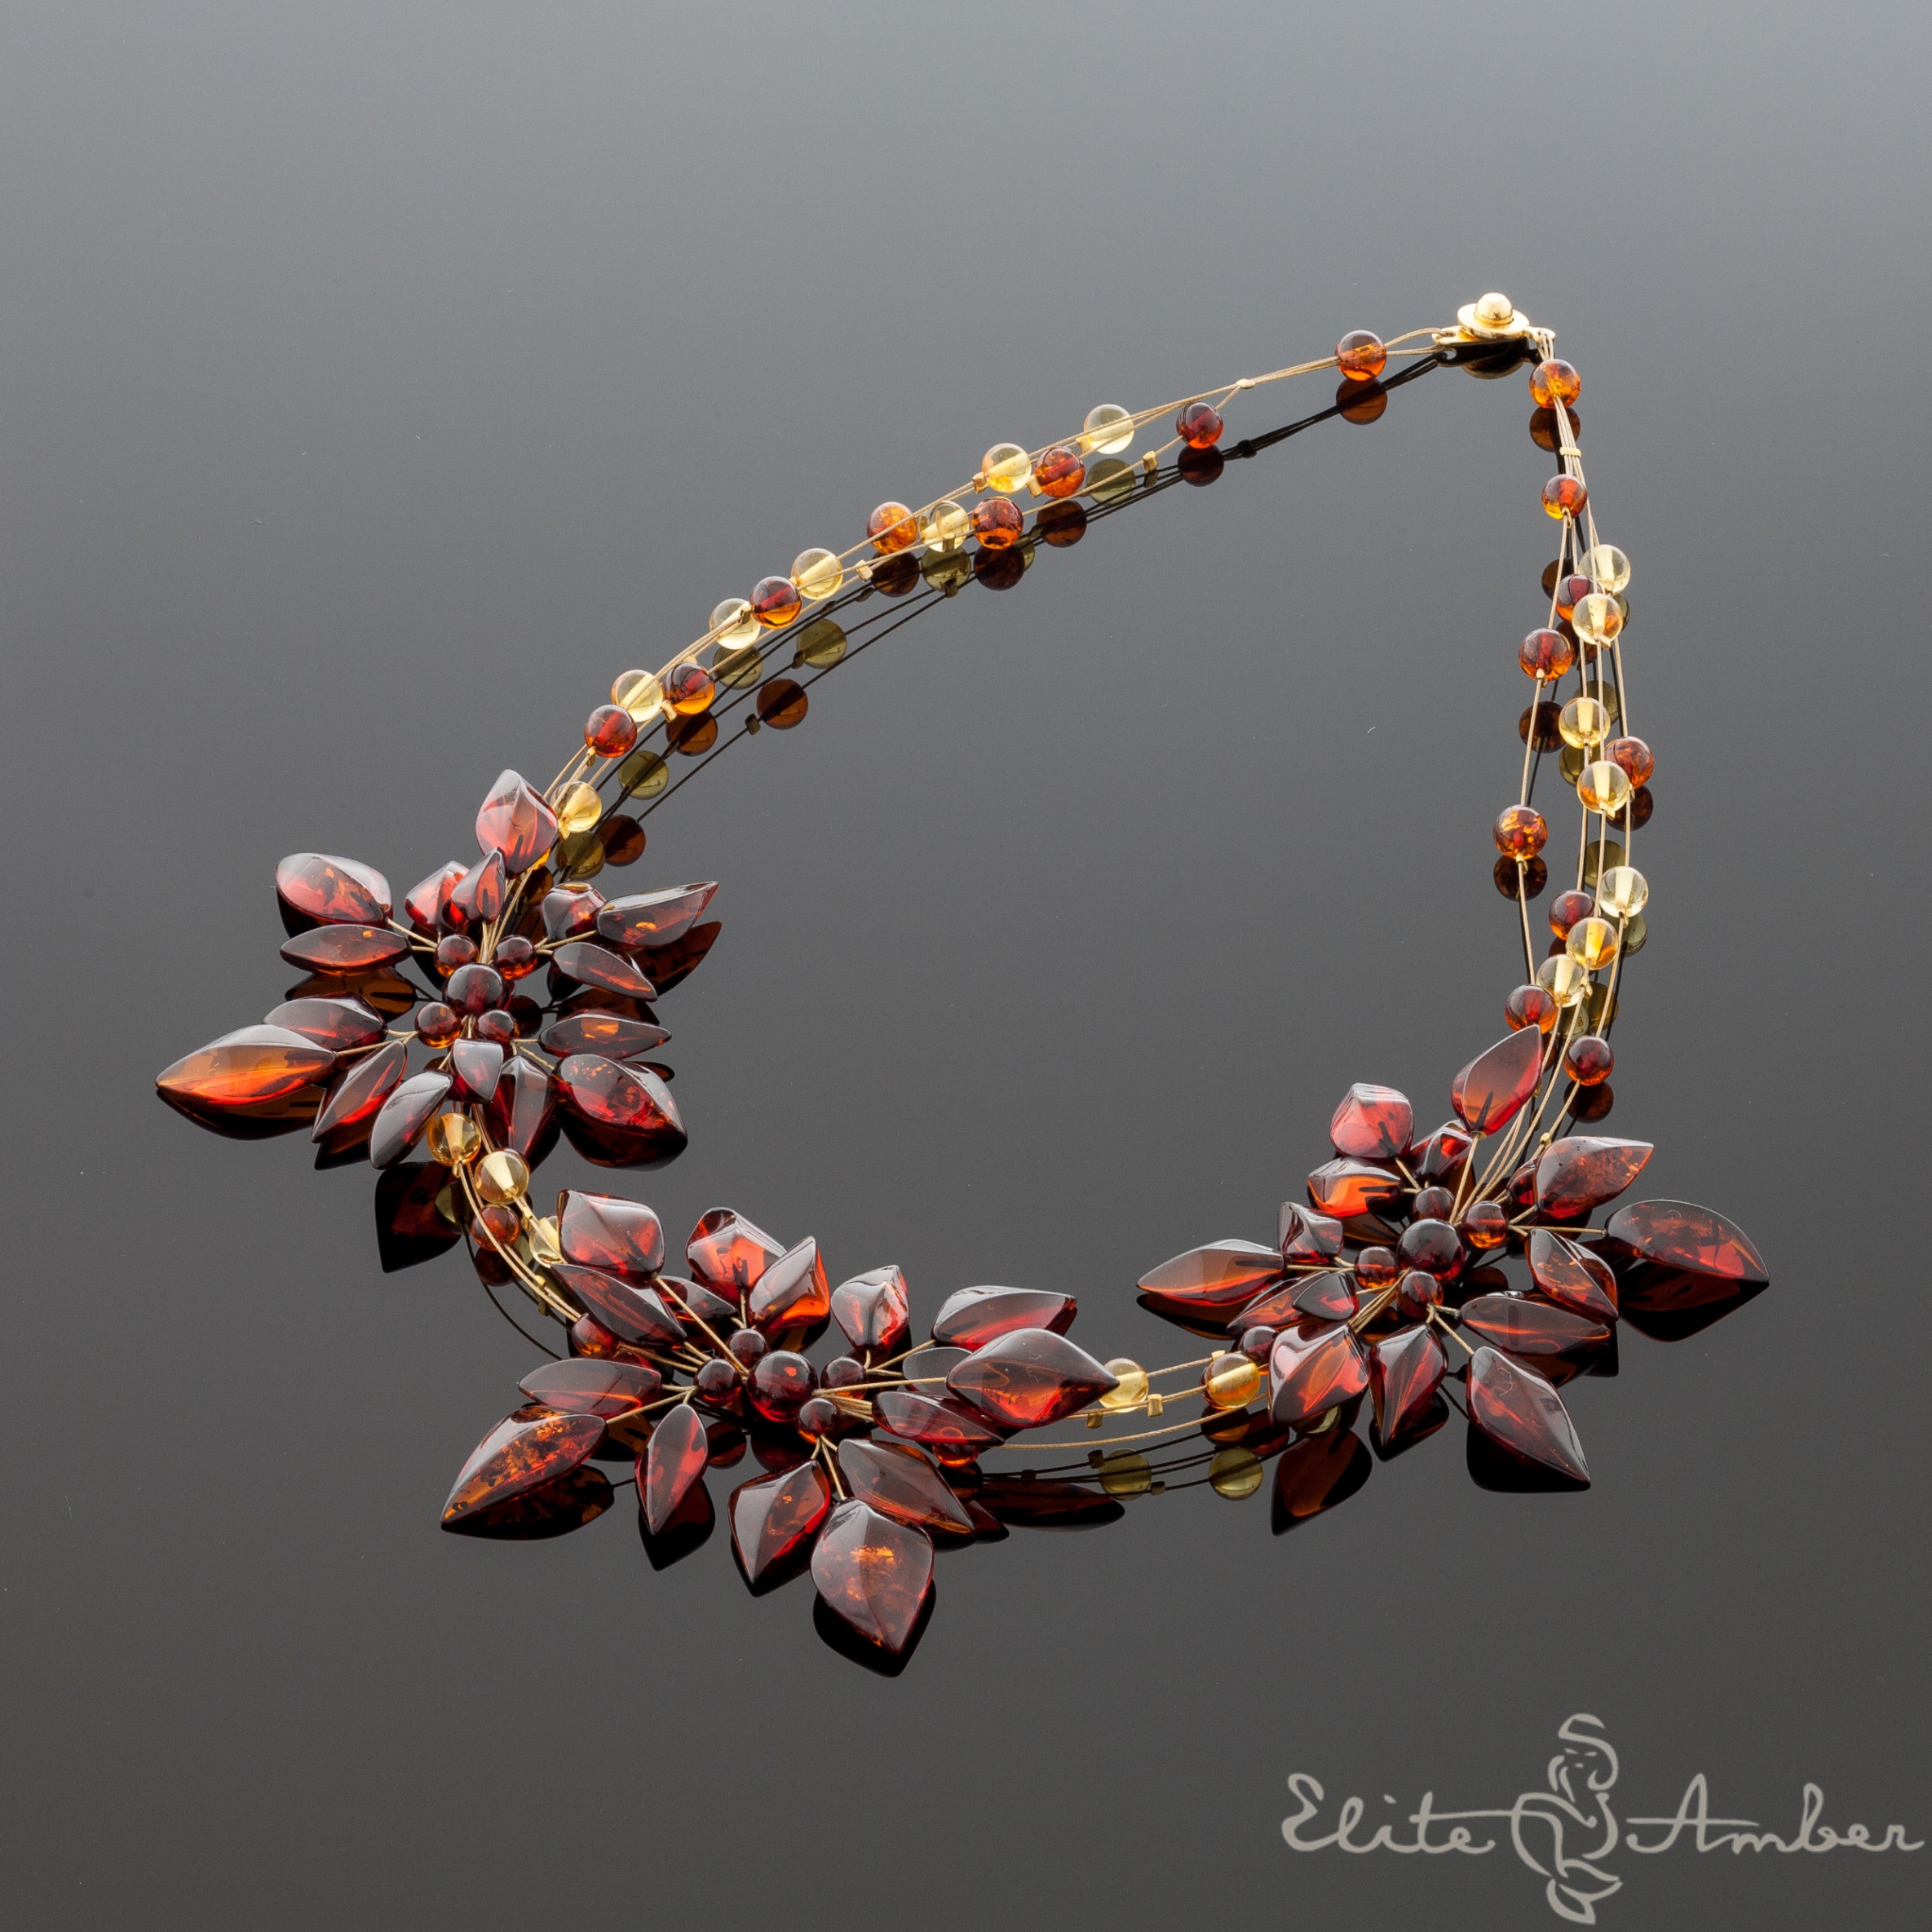 Amber necklace "Big honey flowers"